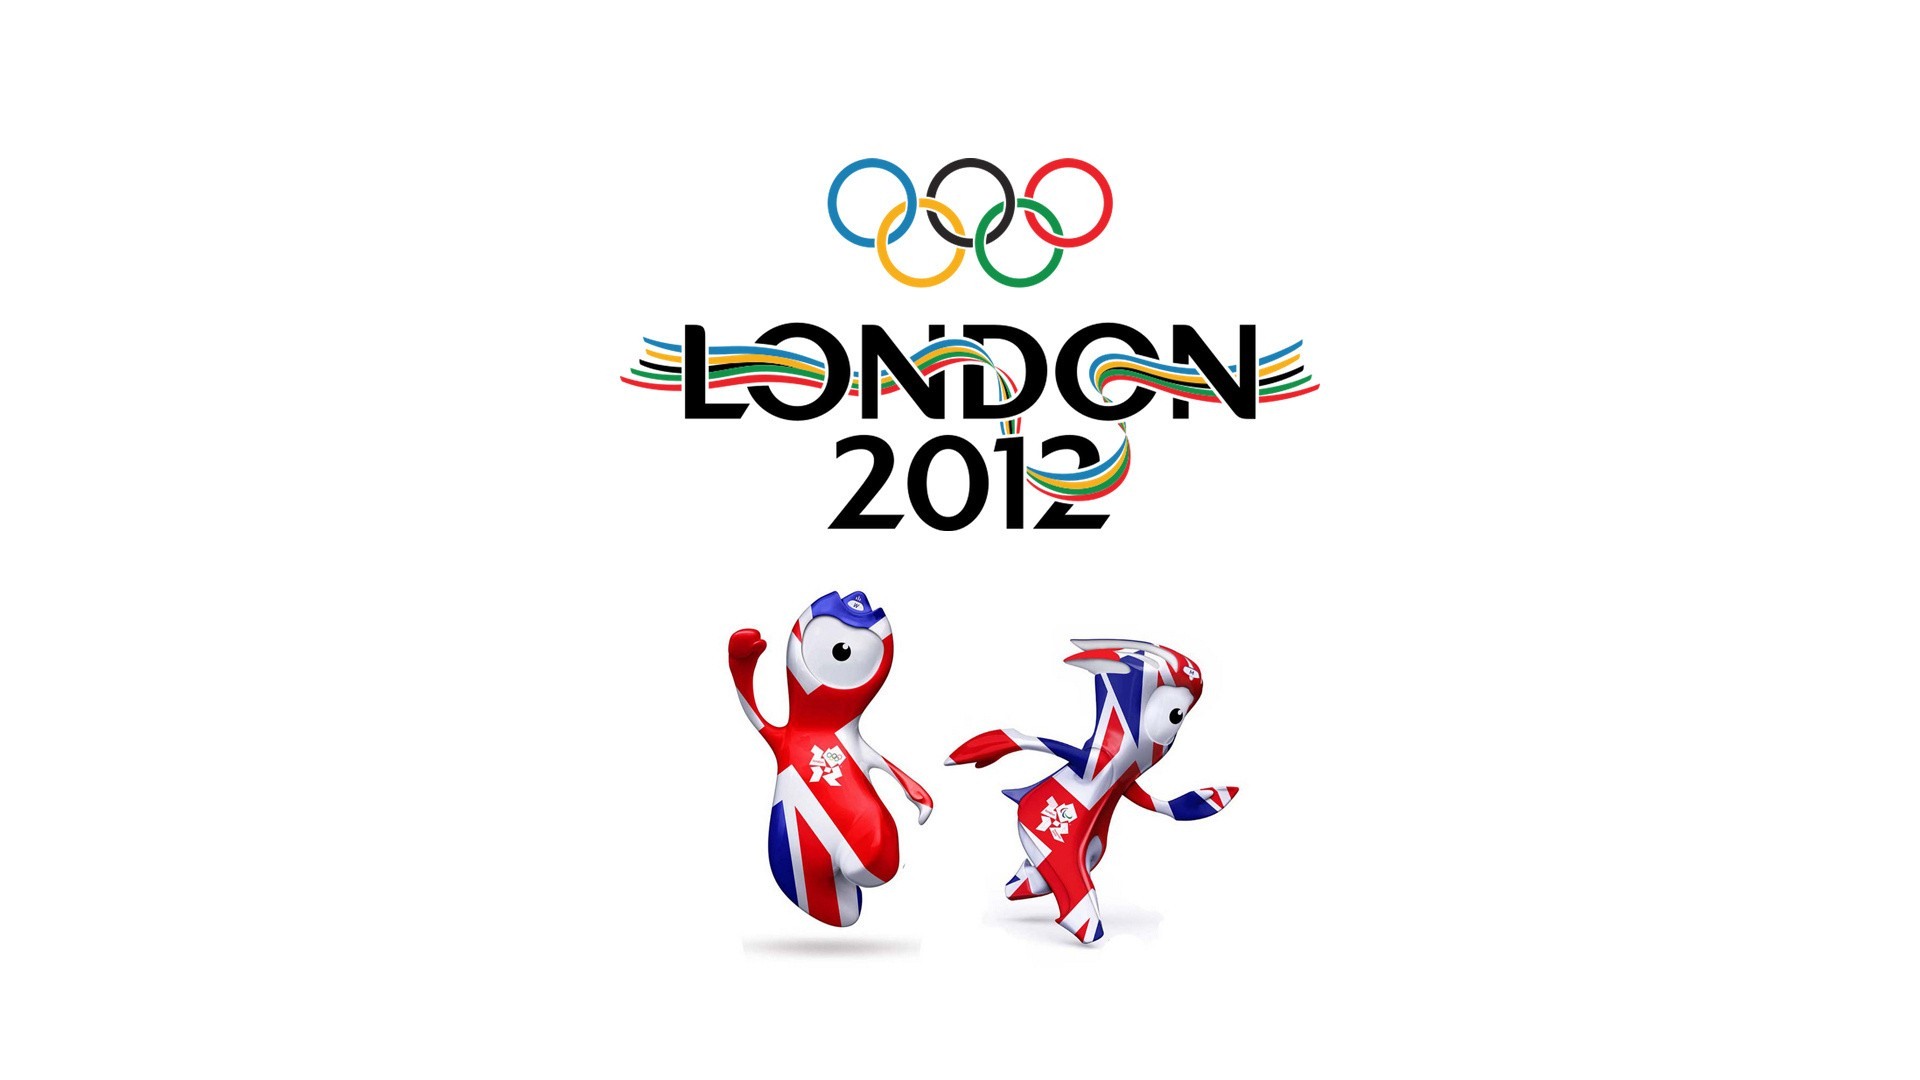 London 2012 Olympics theme wallpapers (2) #20 - 1920x1080